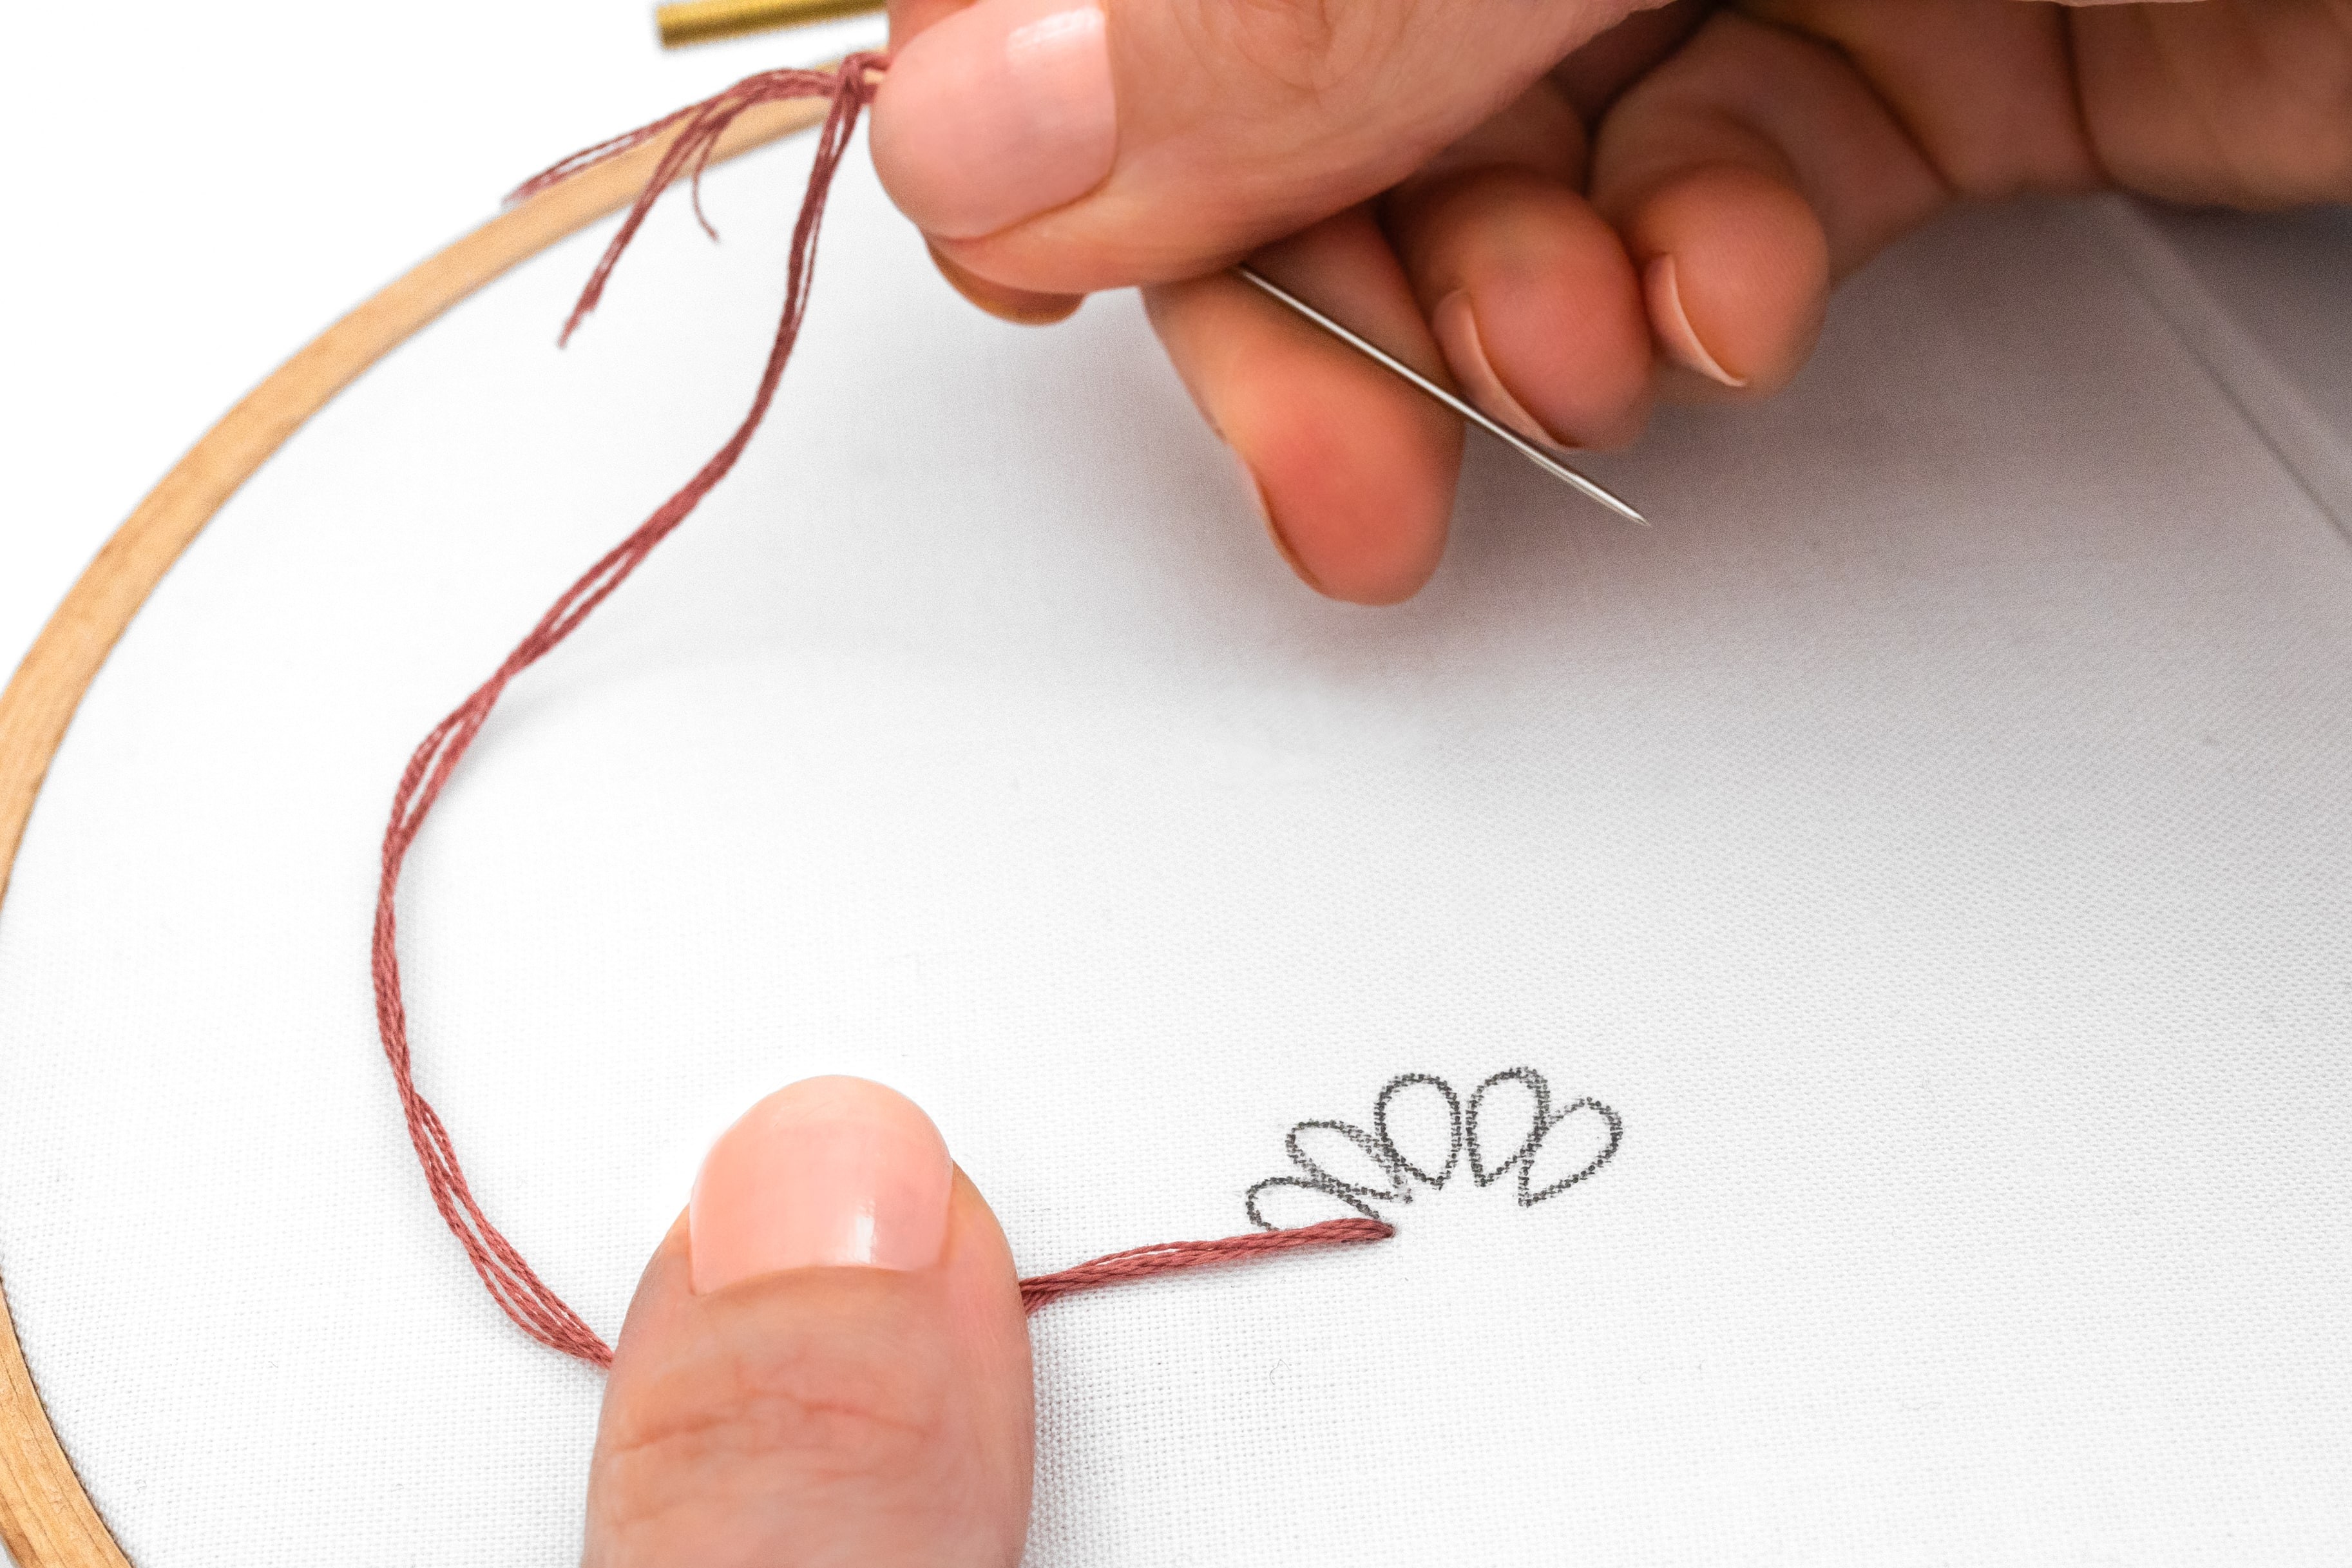 A hand holds a piece of thread over a petal shape.